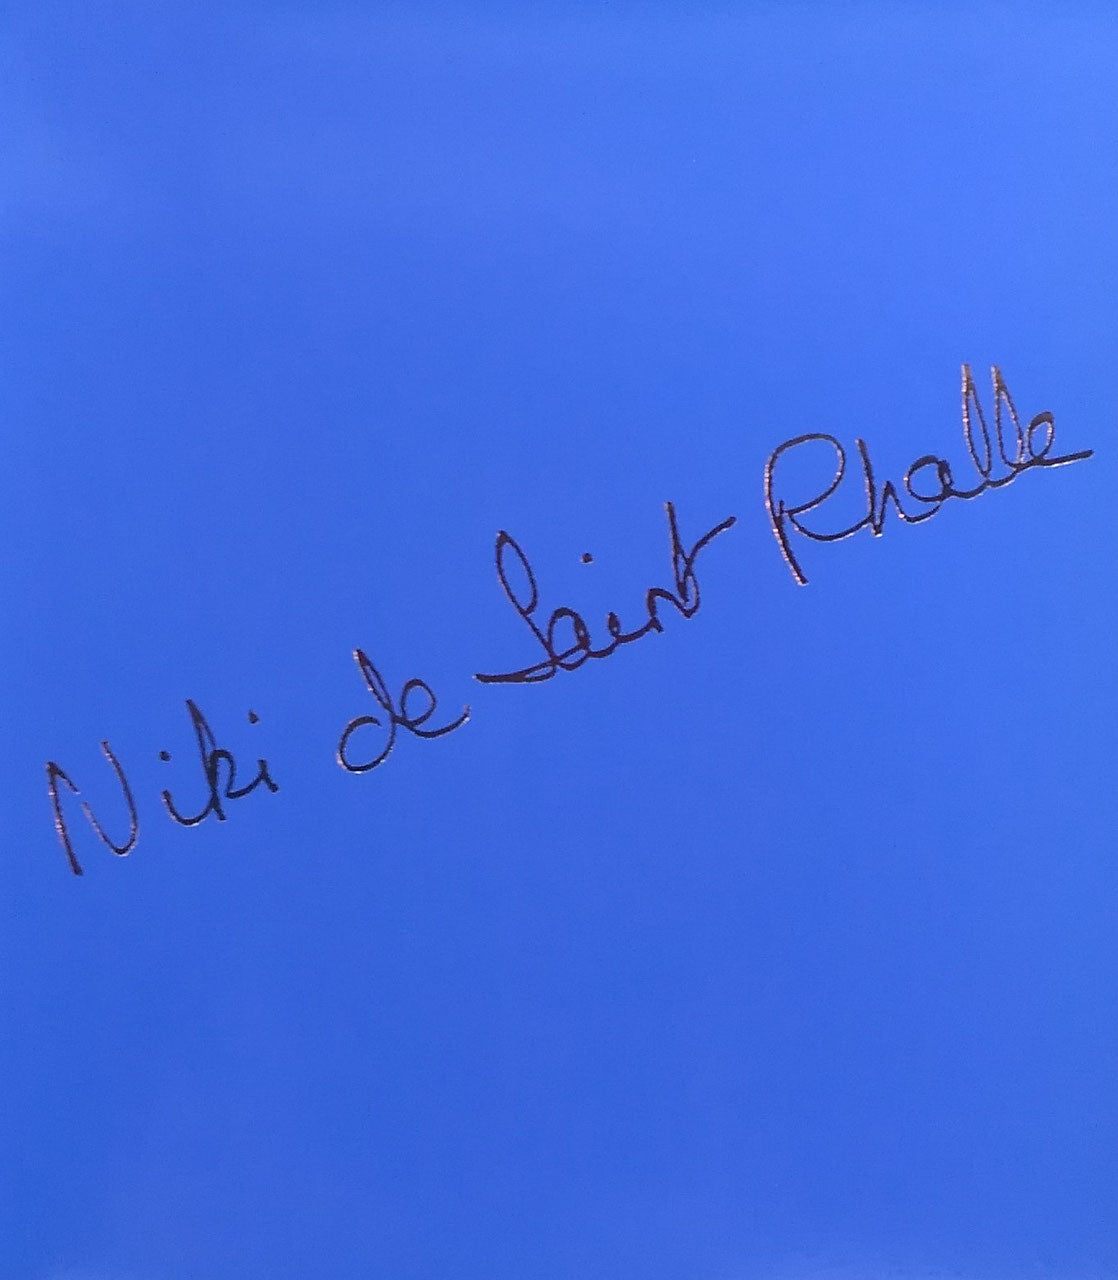 Niki de Saint Phalle　Exhibition　ニキ・ド・サンファル　2冊セット